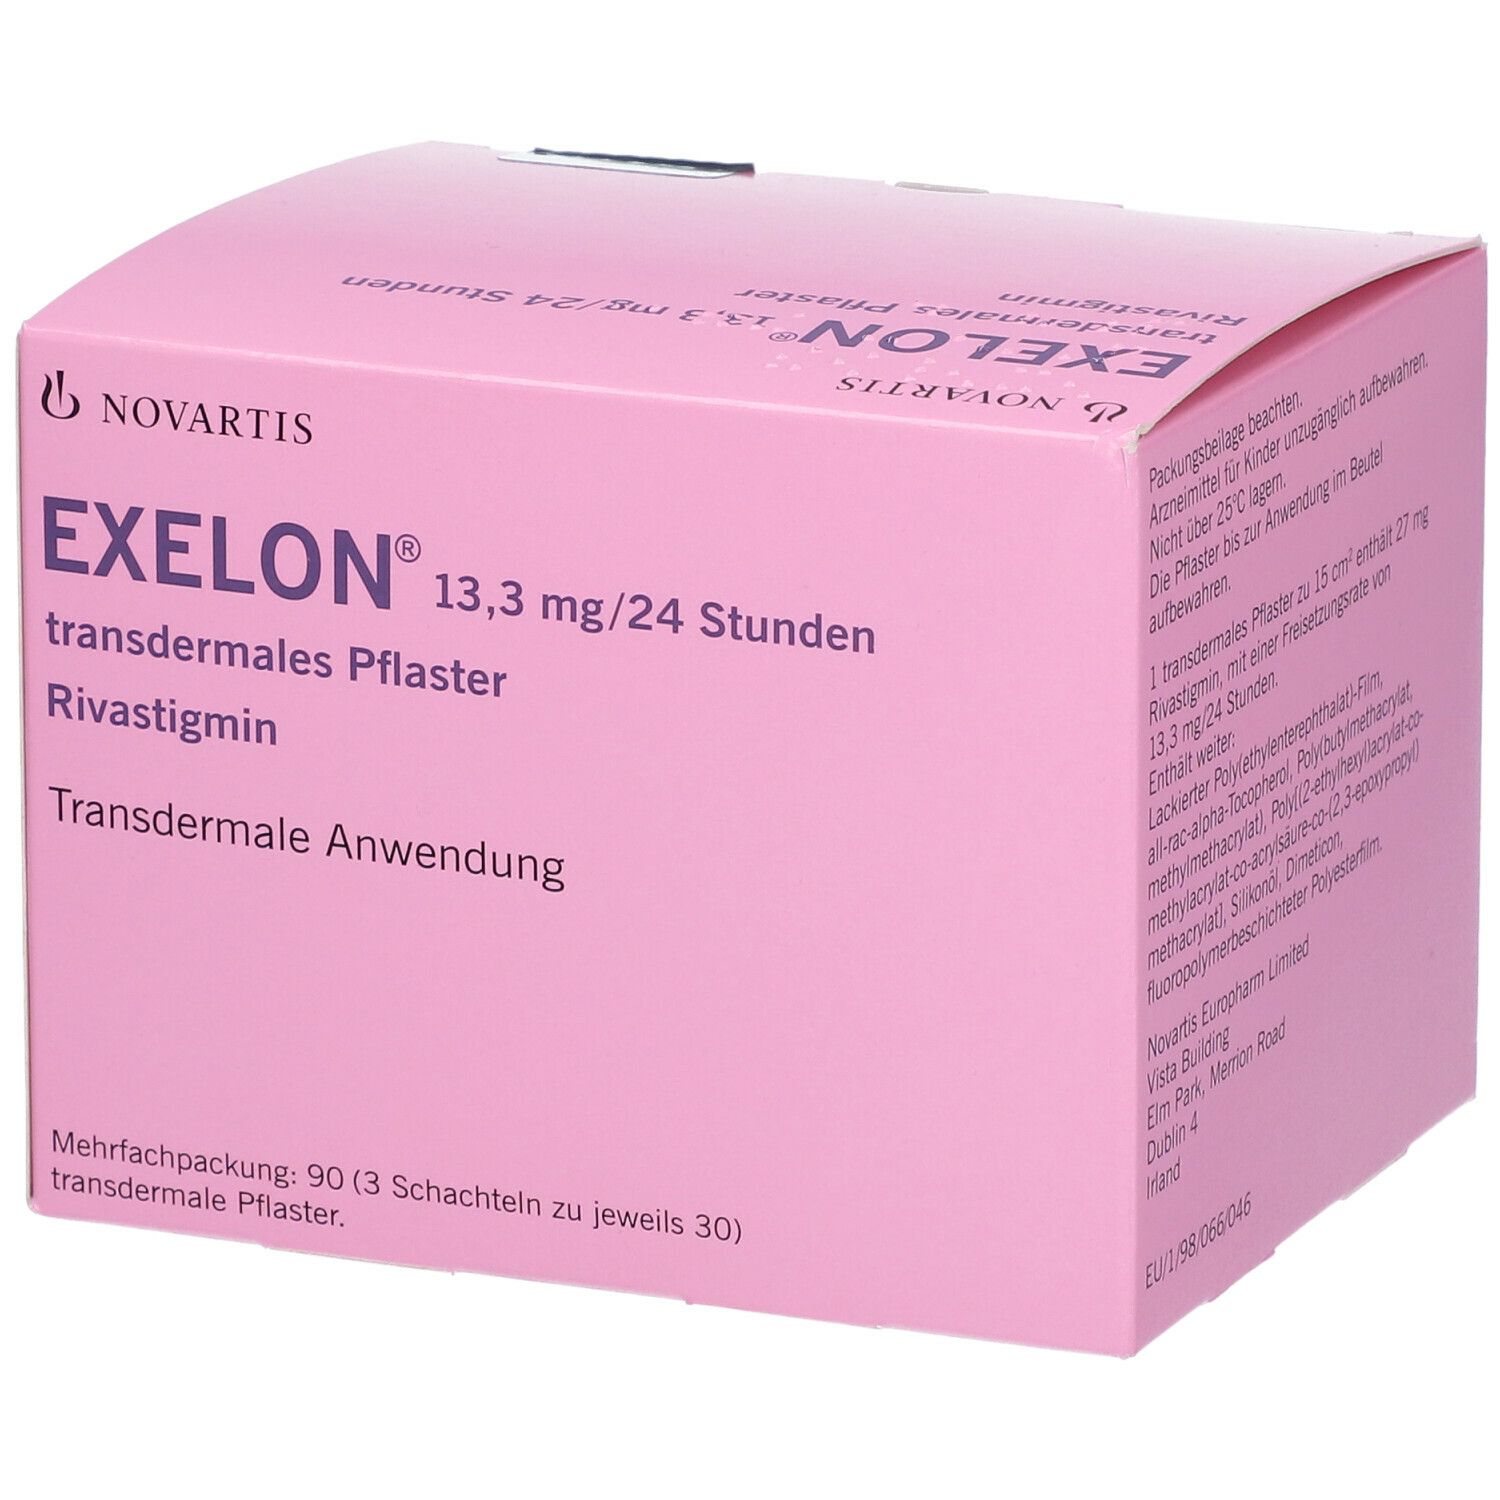 Exelon® 13,3 mg/24 Stunden